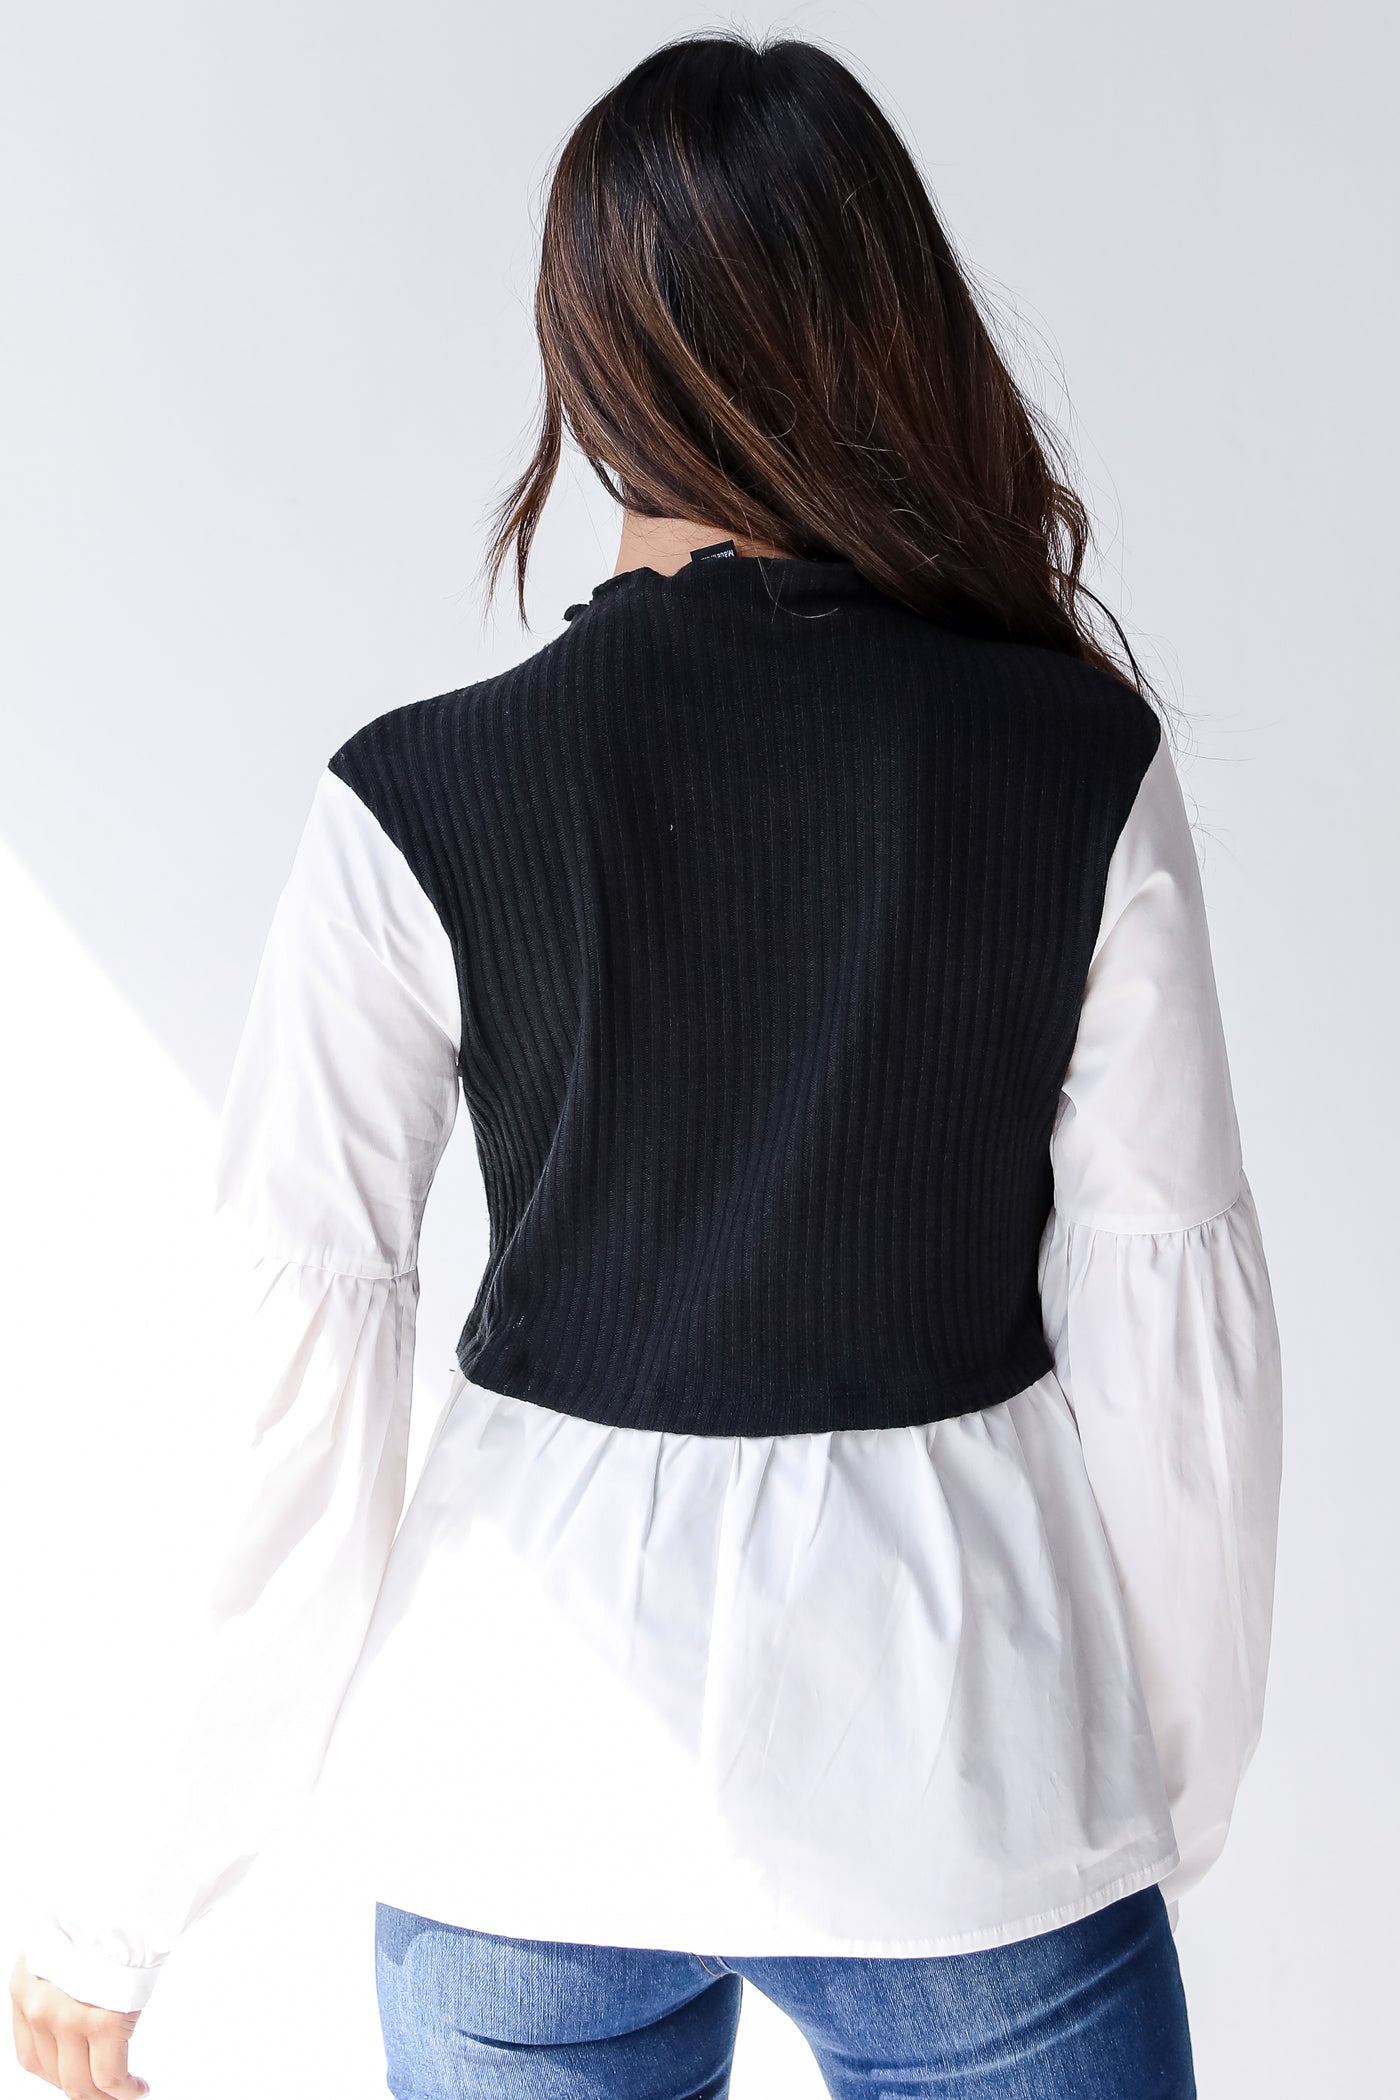 sweater vest blouse back view